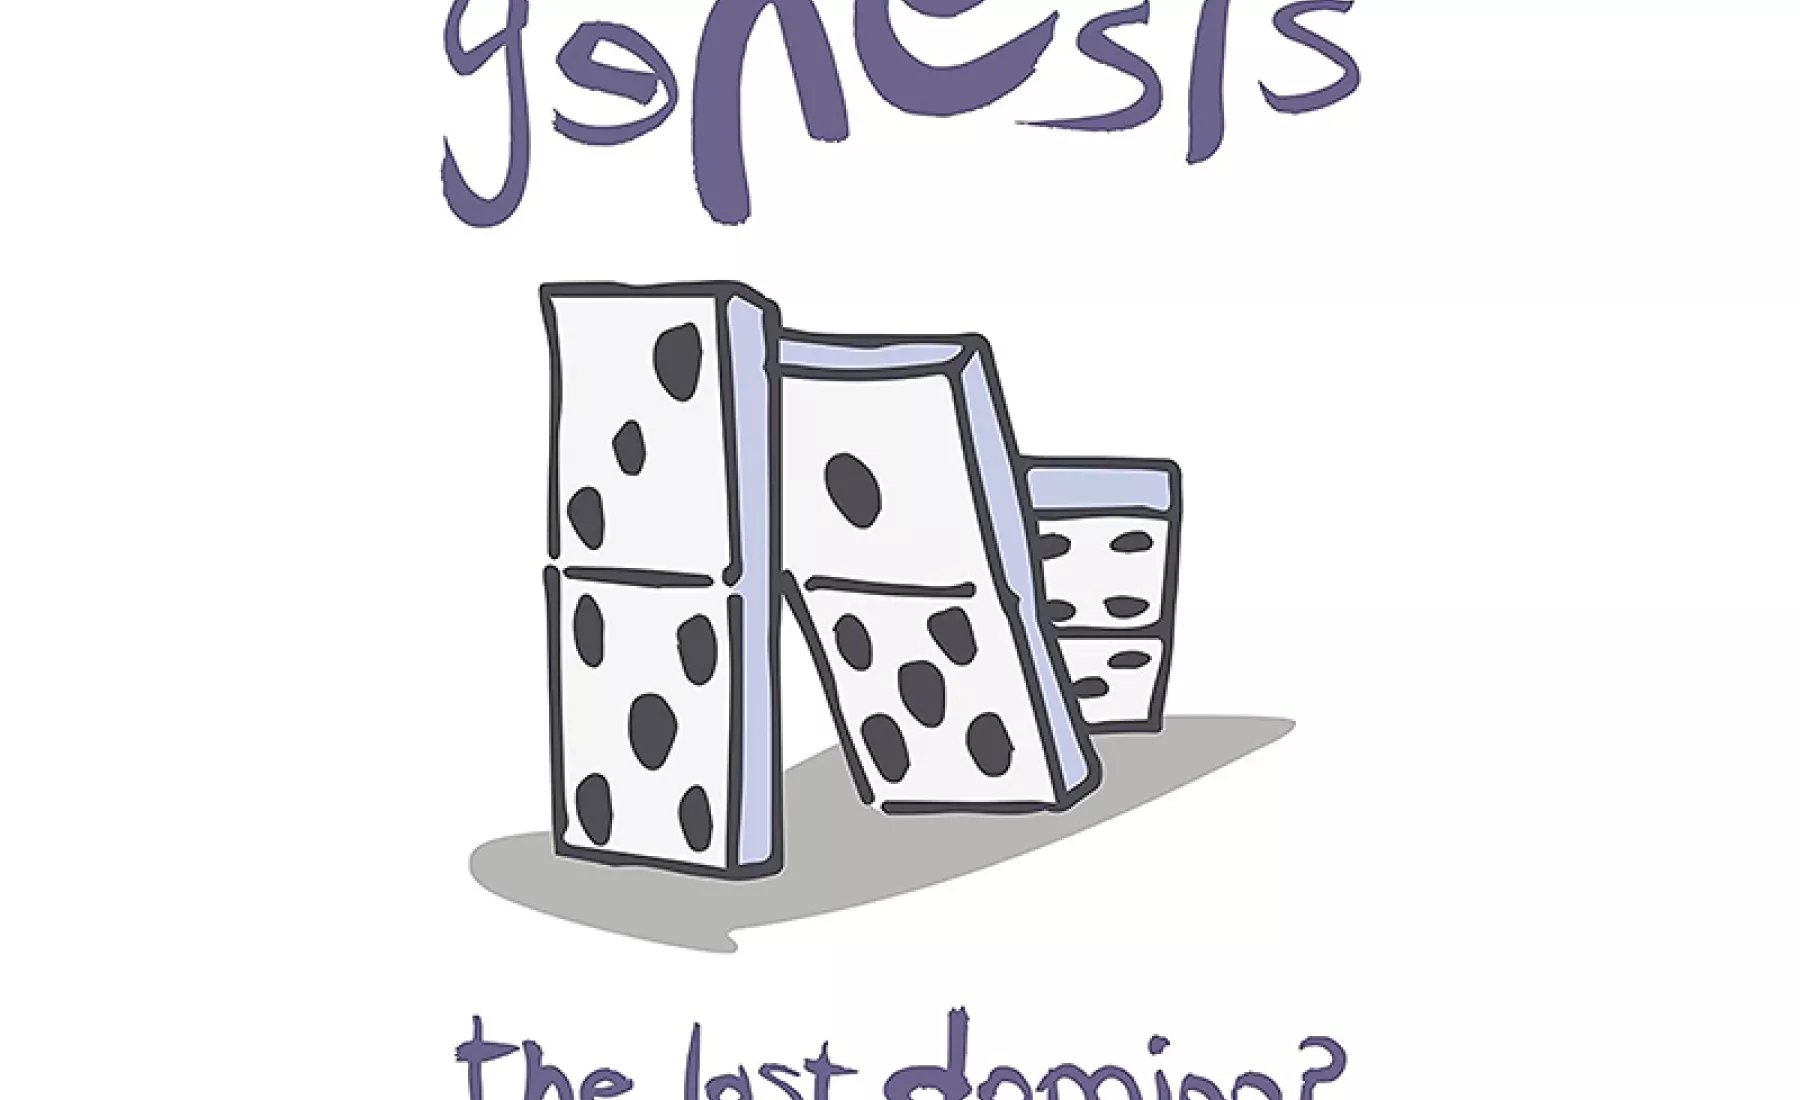 Genesis: The last domino?